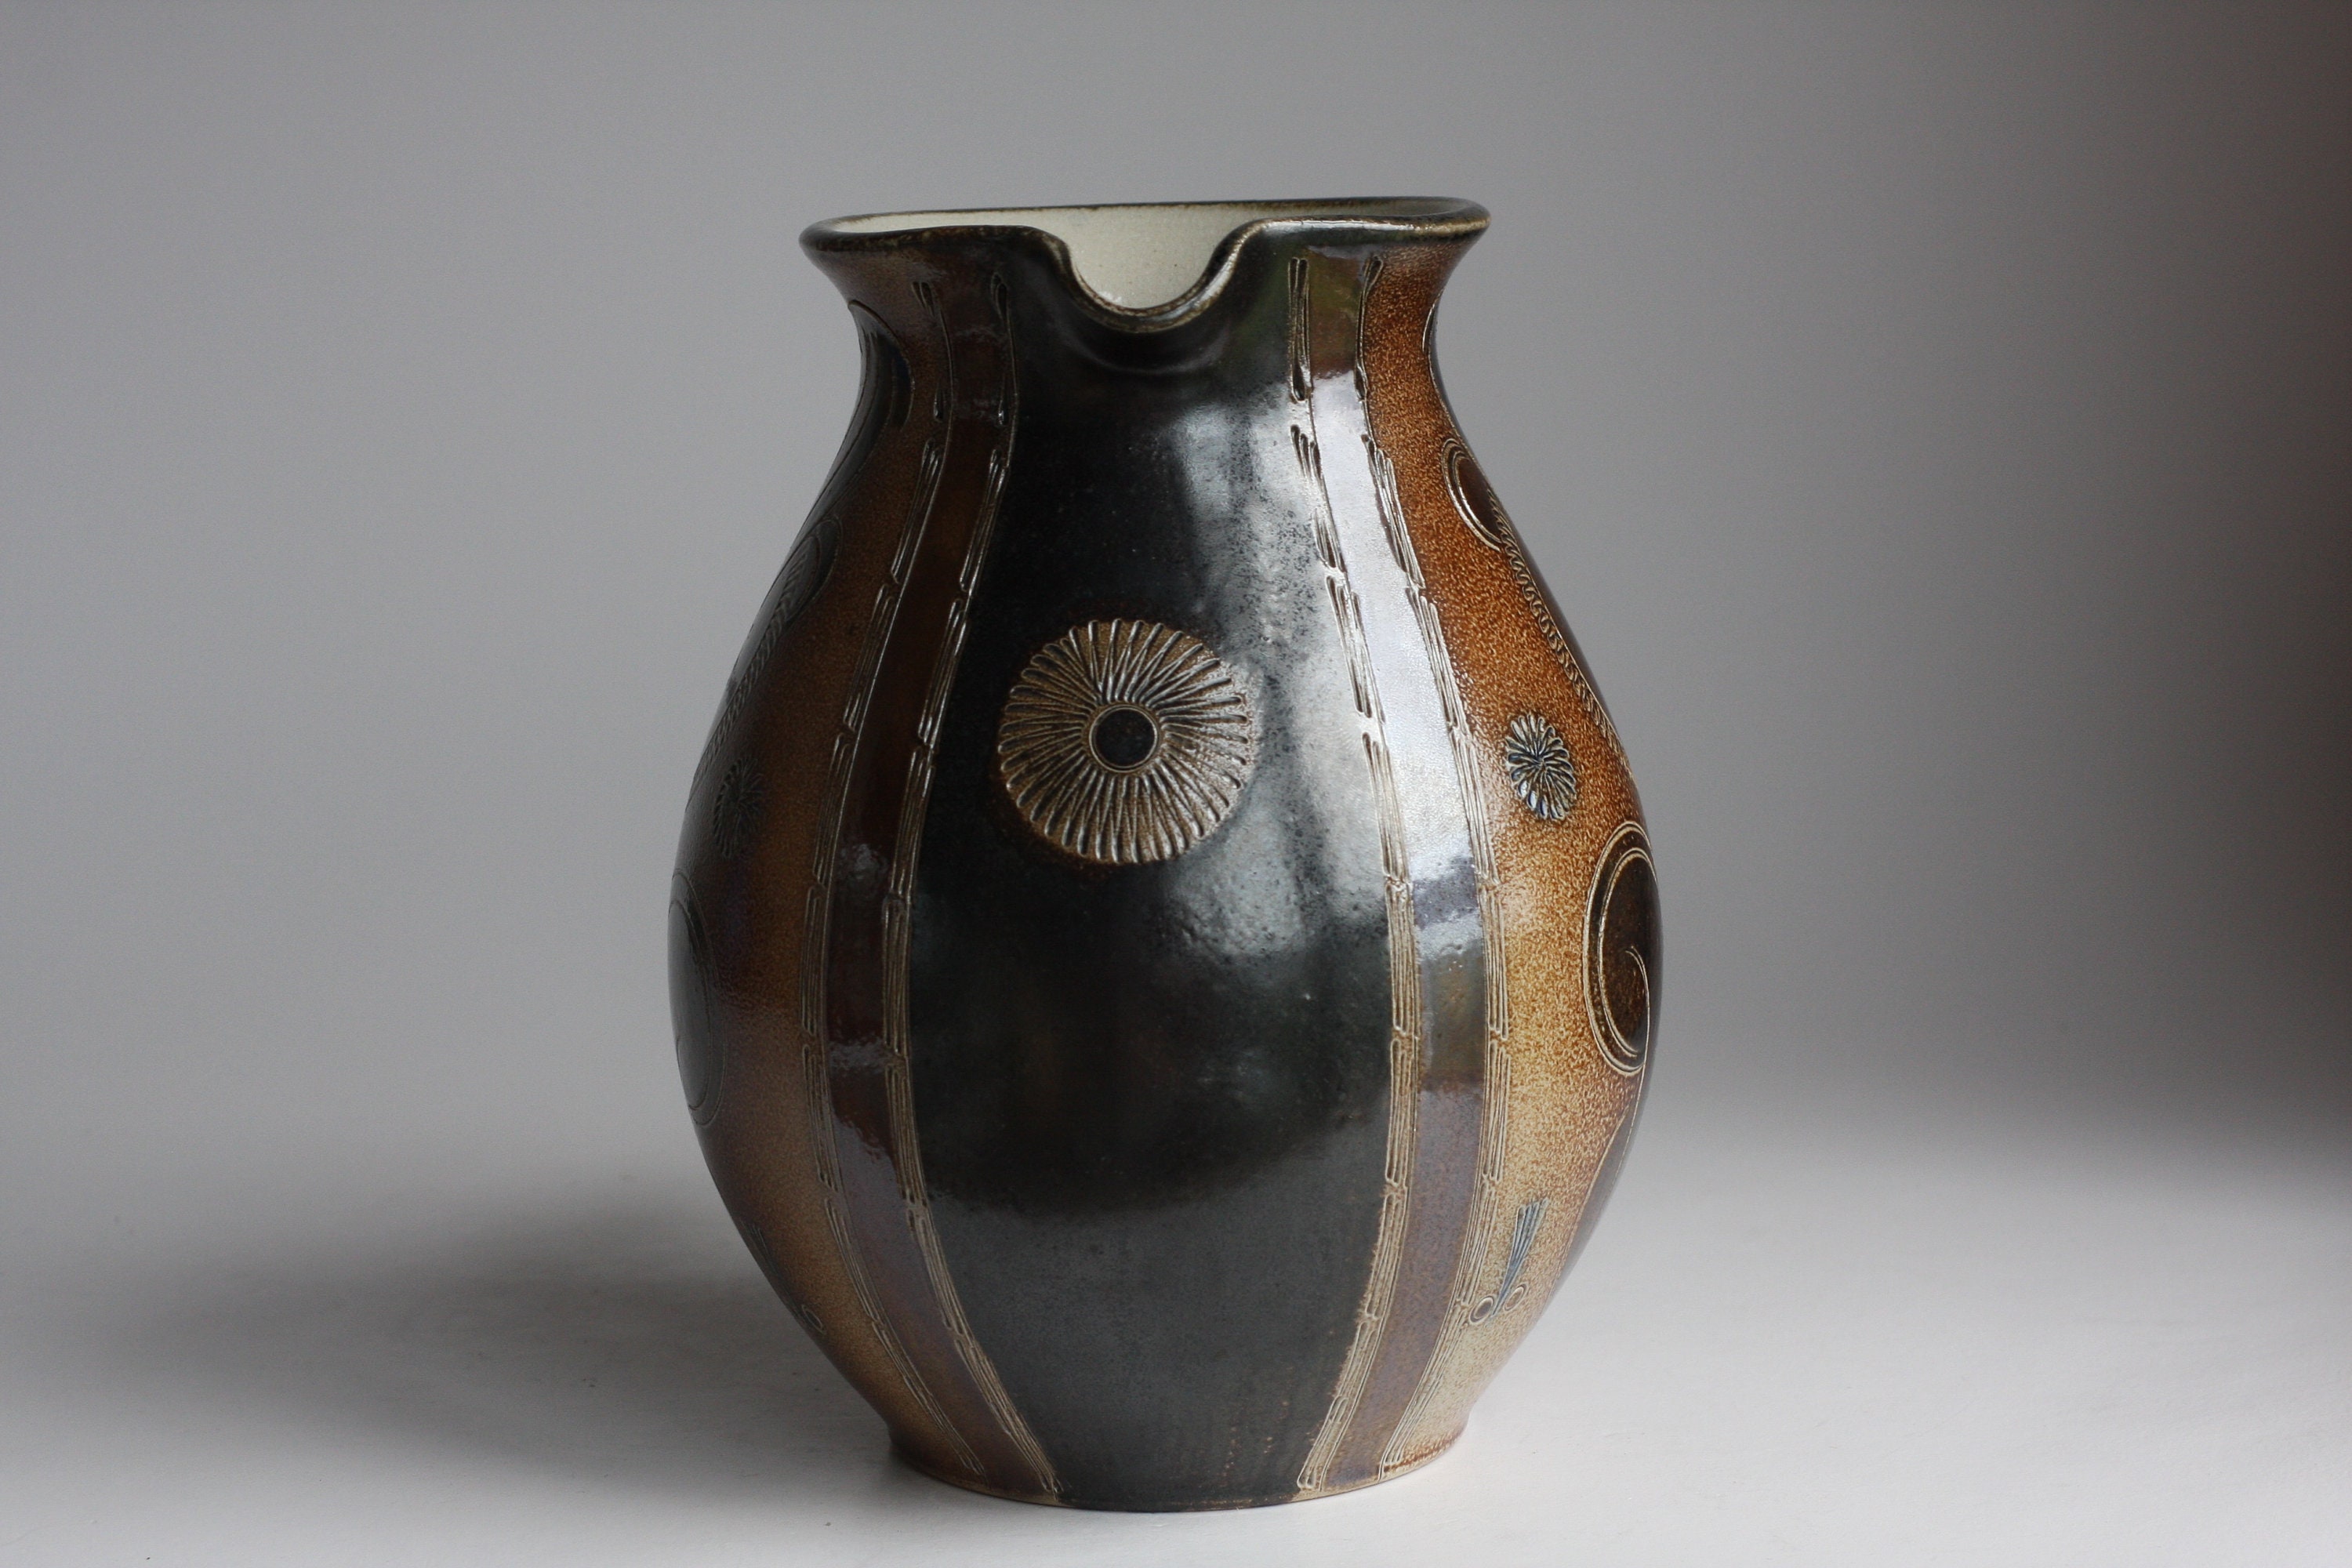 Keramik sgraffito jug vase German pottery Mid Century 1970s Wim MÜHLENDYCK 1905-1986